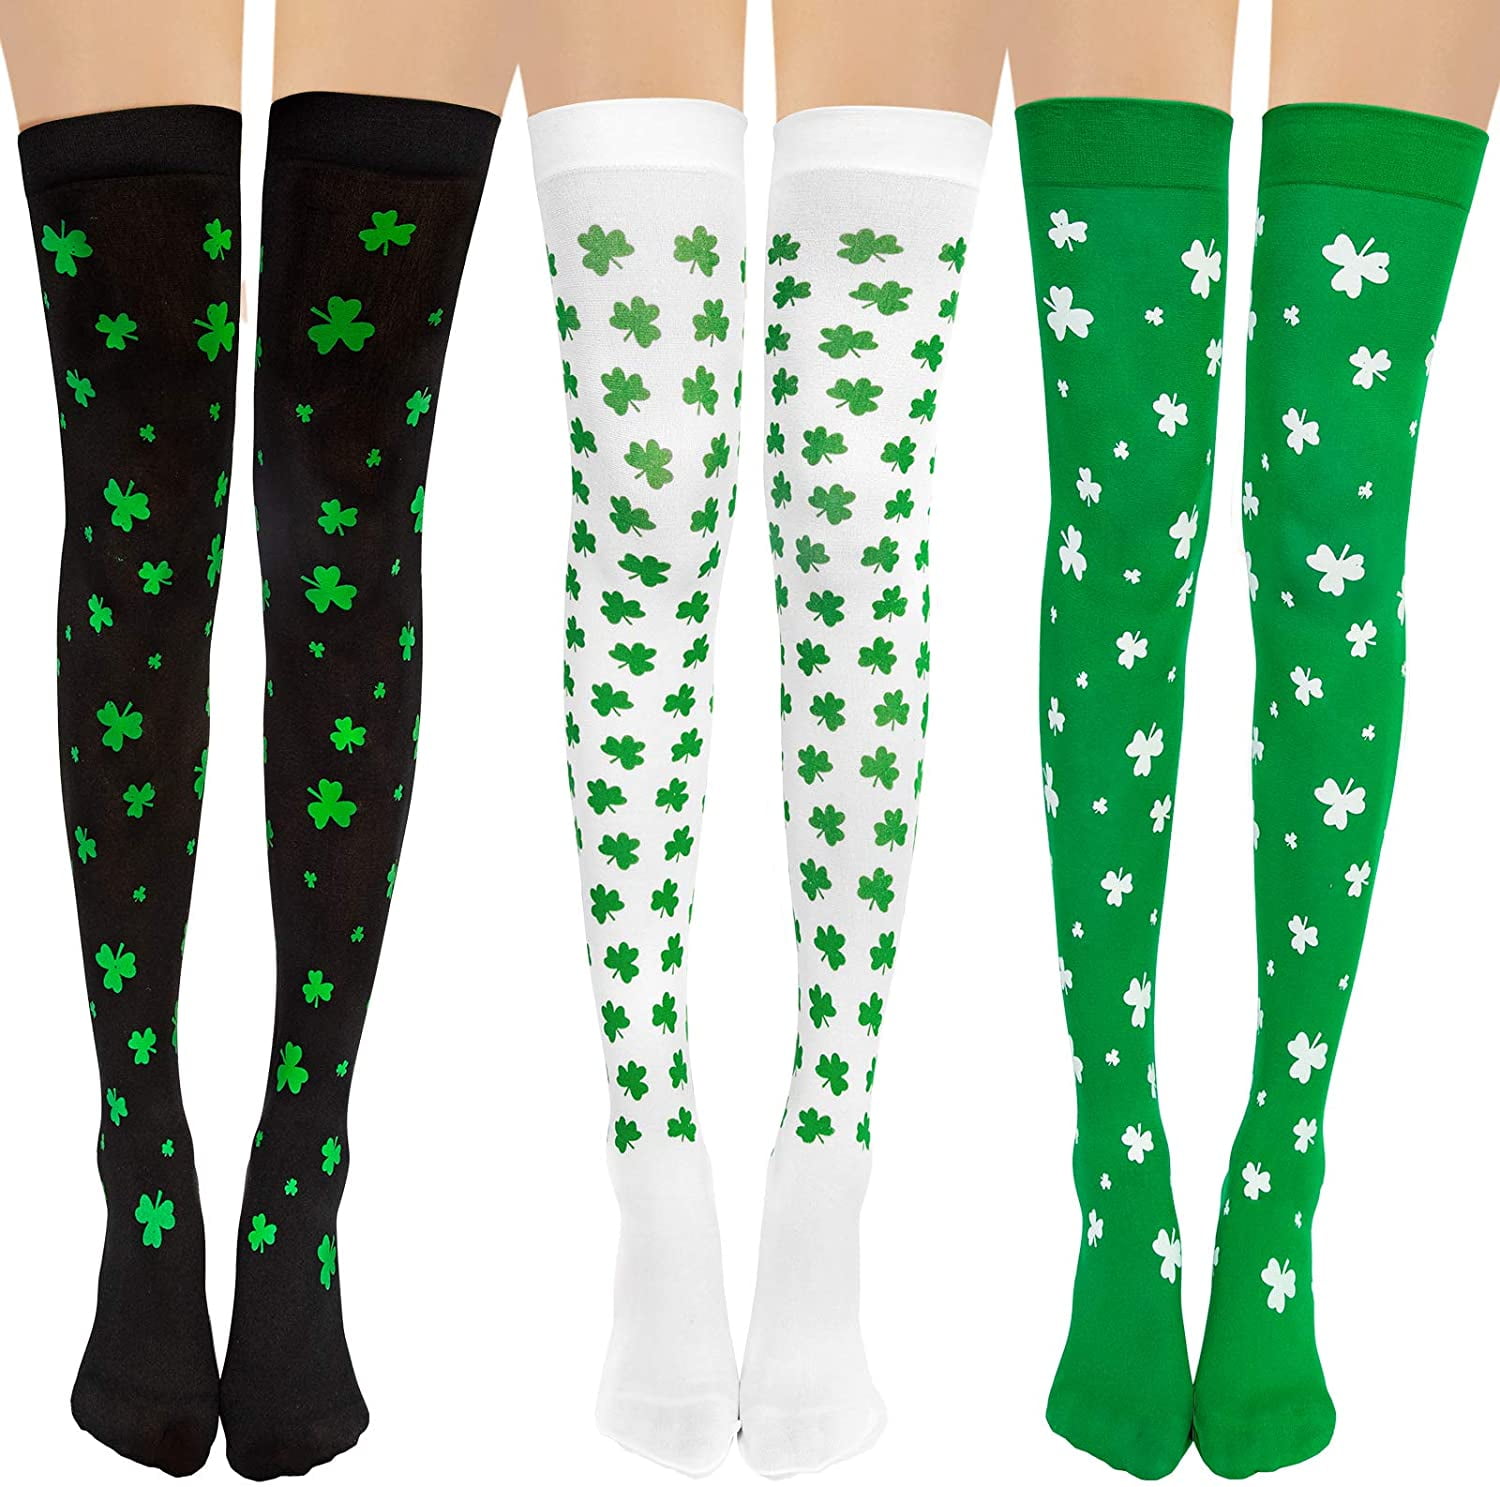 St Patrick Day Party Stockings Thigh High Green & White Stripes & Shamrocks